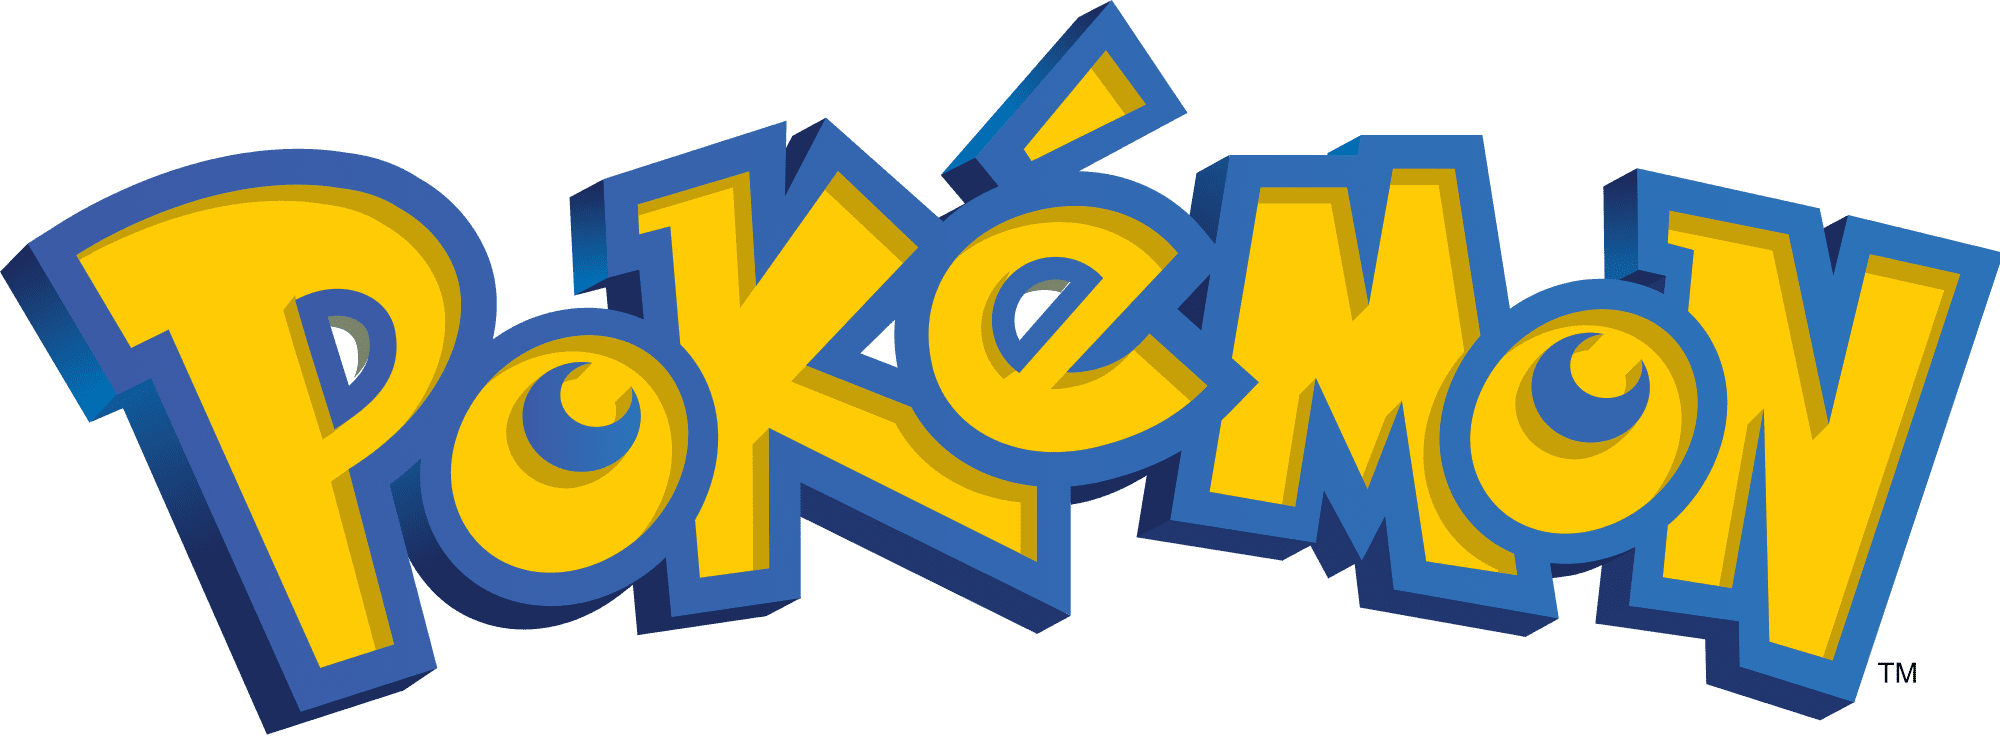 english_pokemon_logo-svg